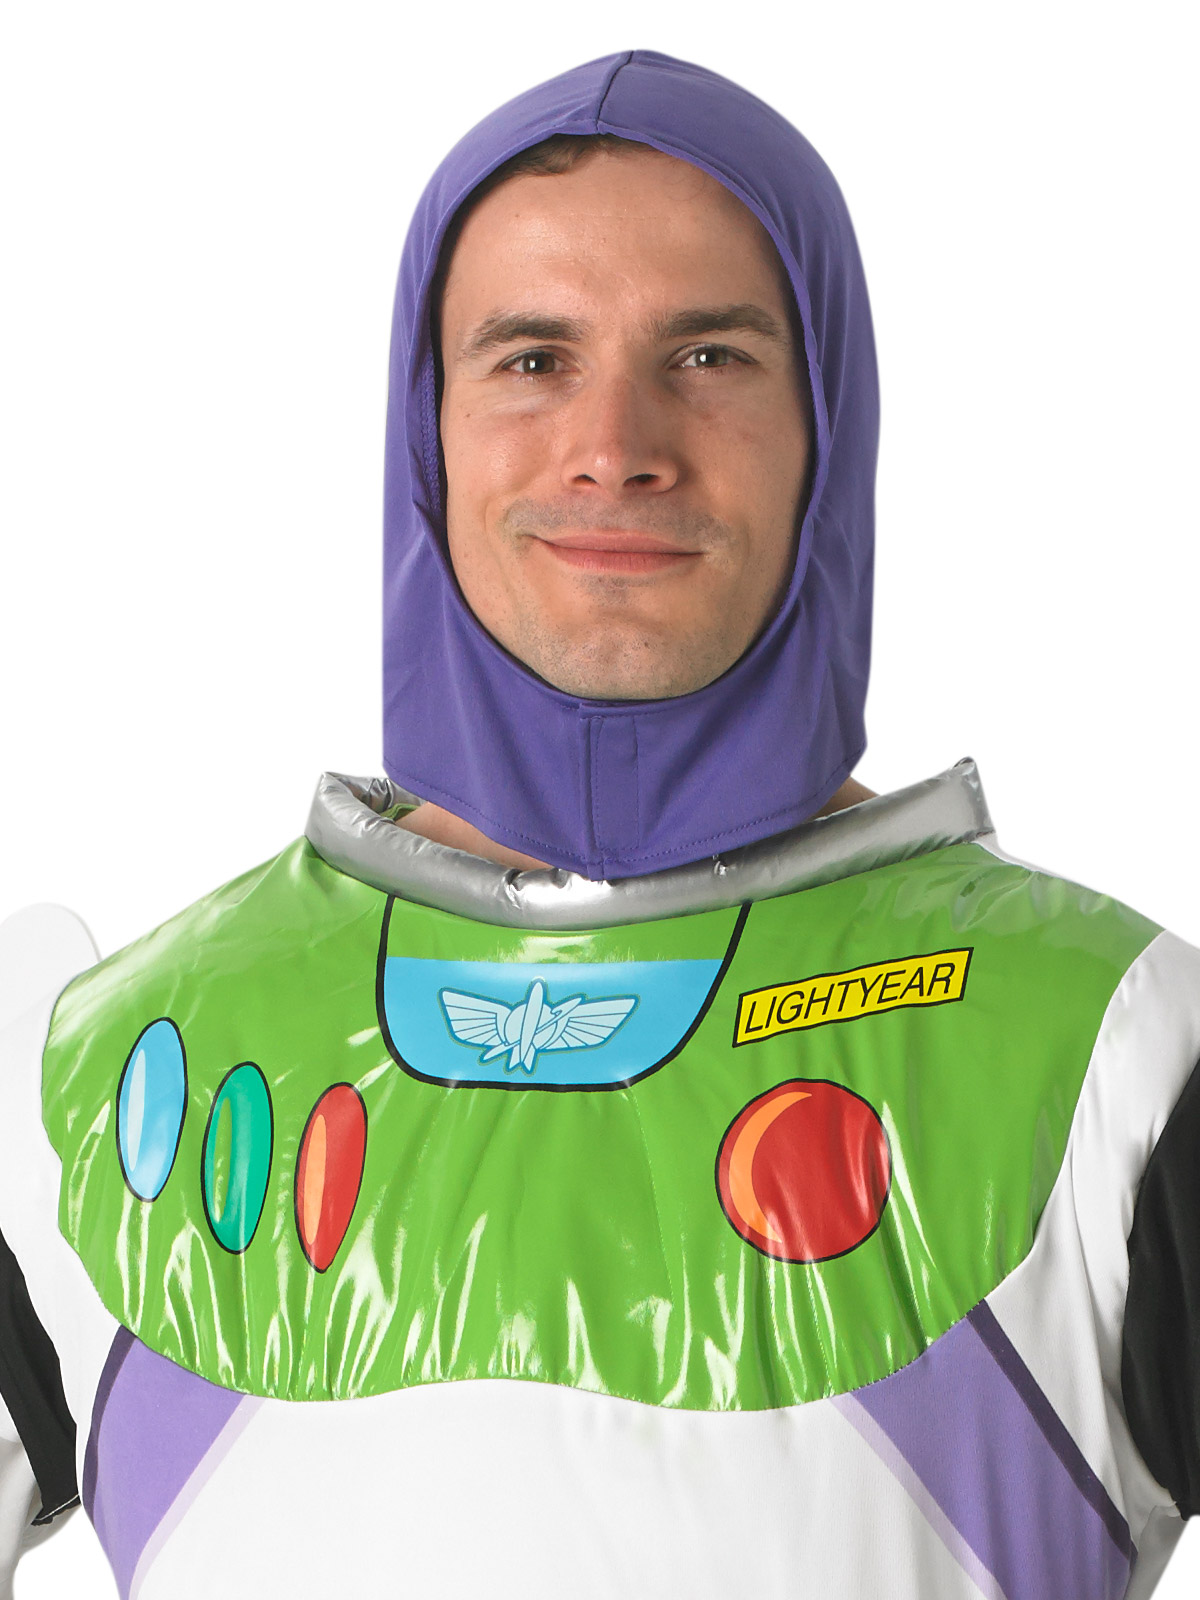 Buzz light year costume adult